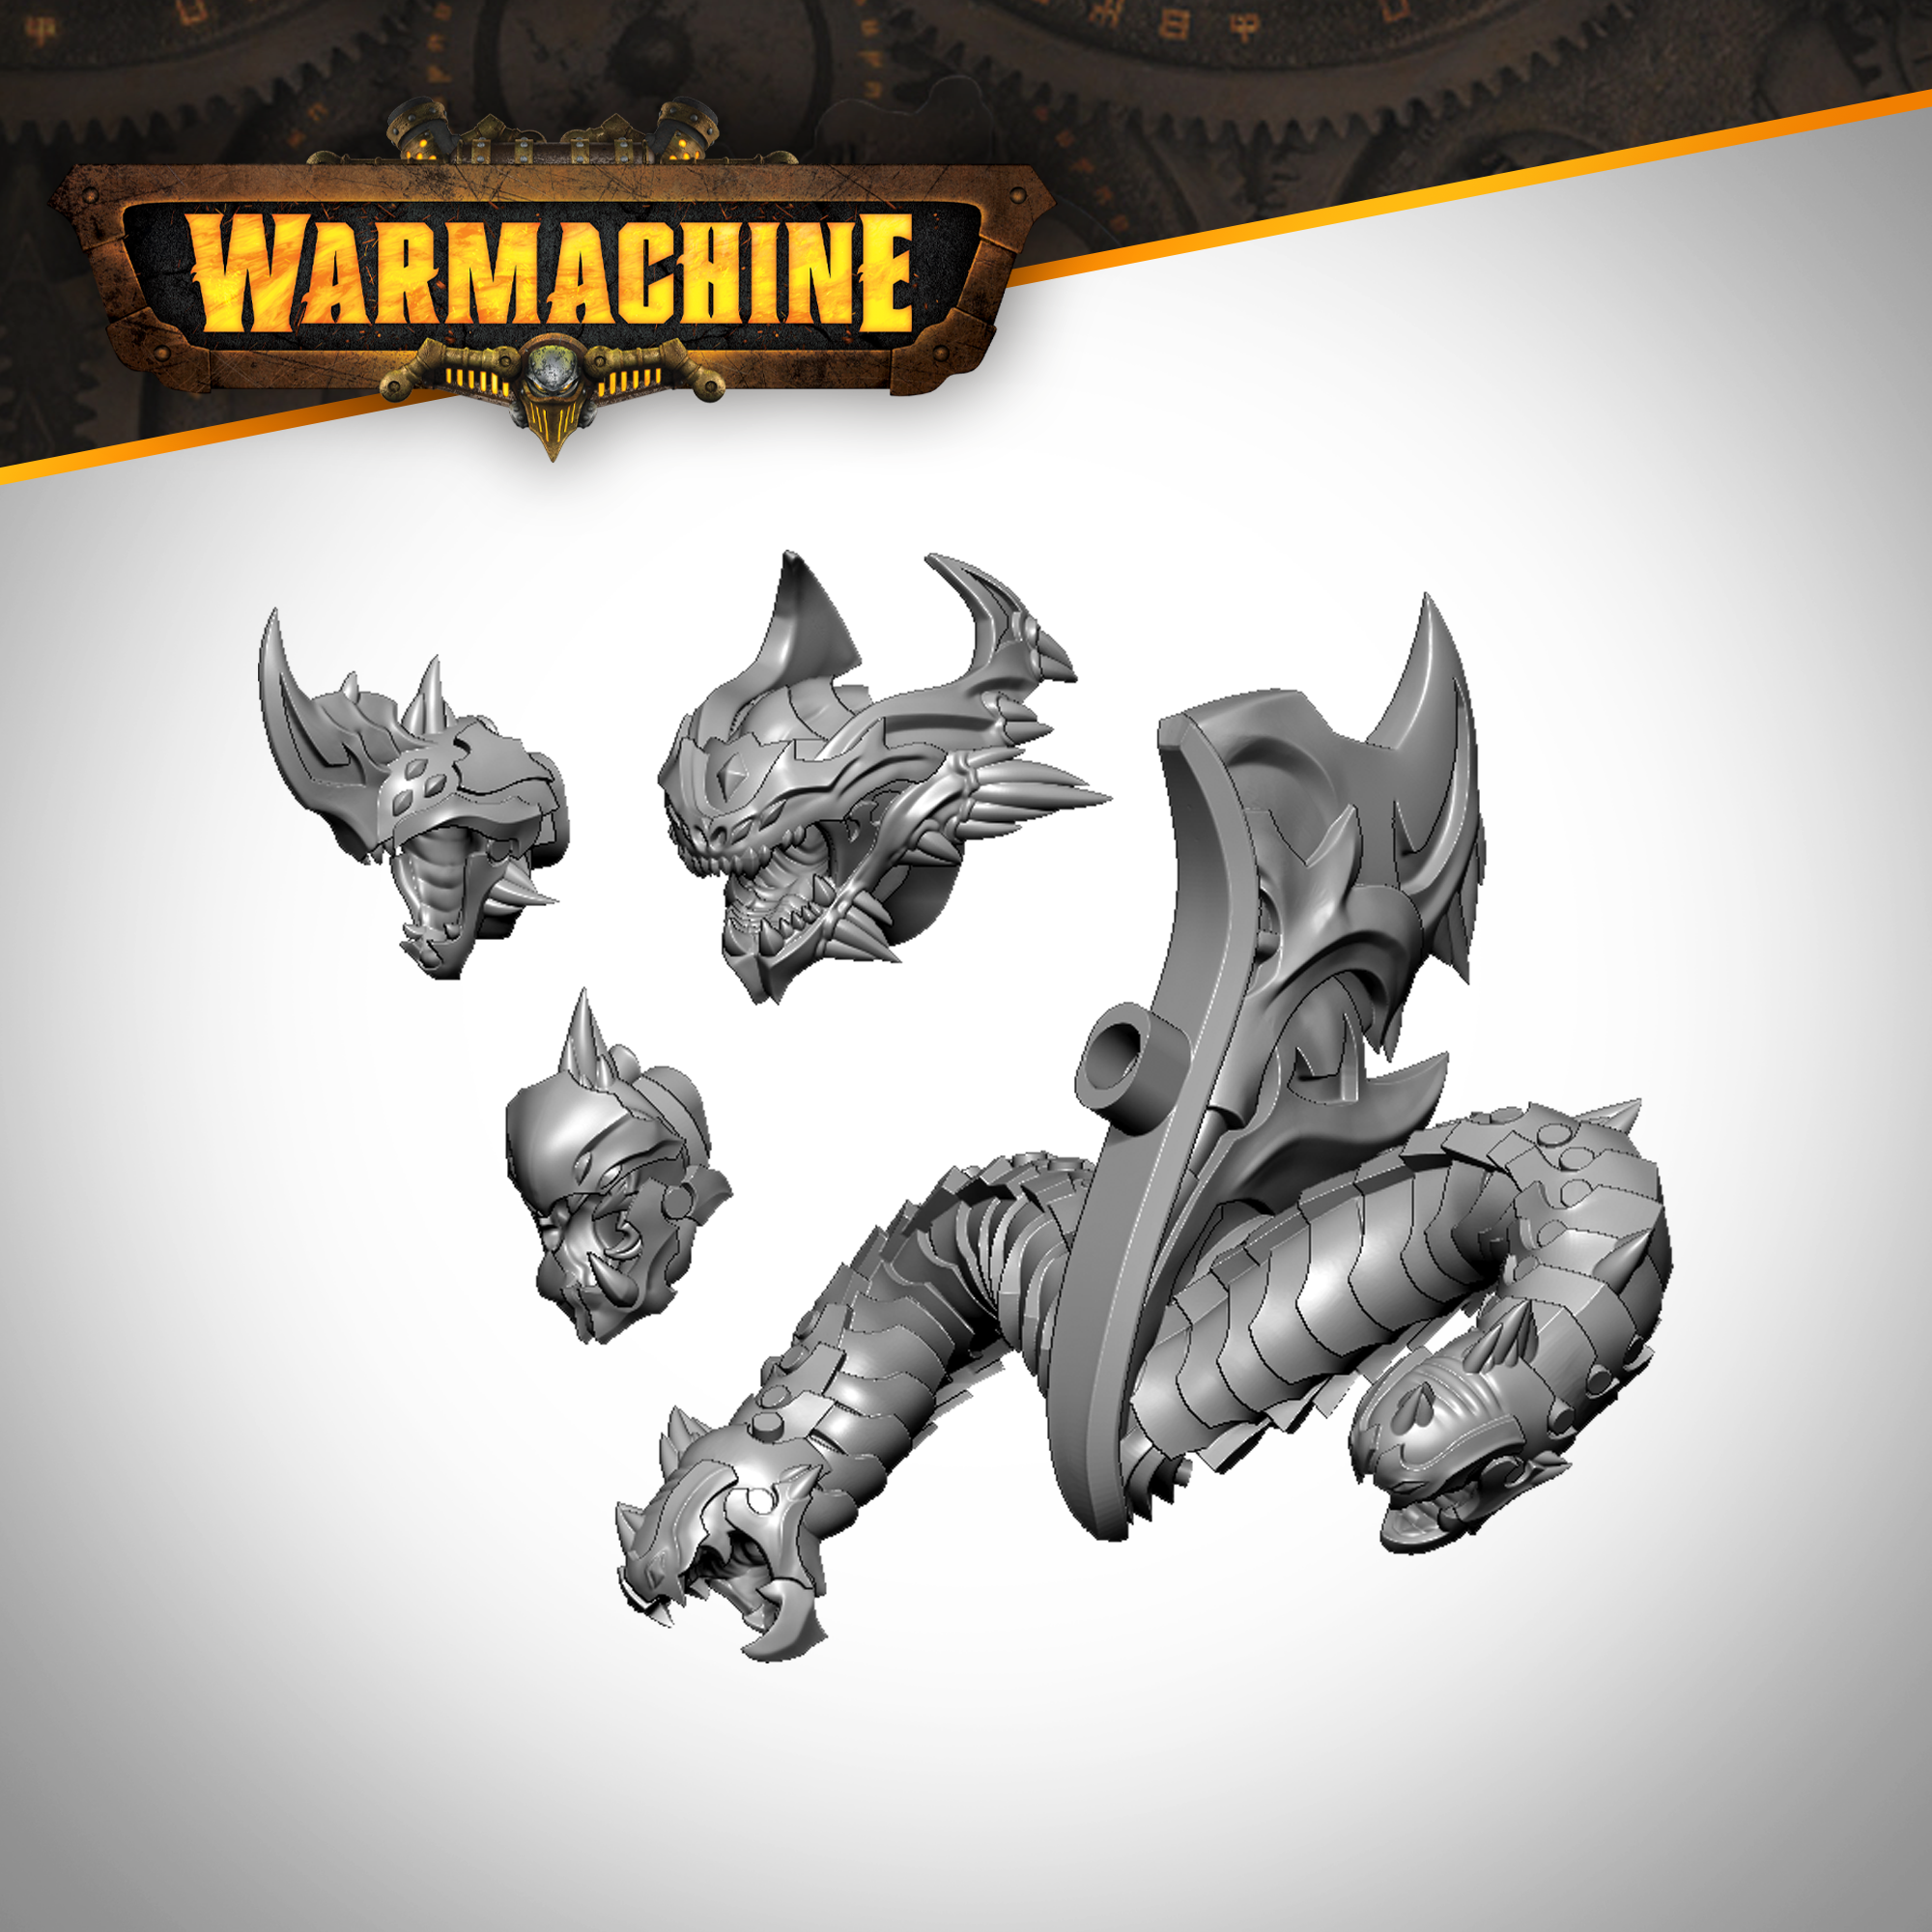 Warmachine: Skylla, the Abyssal Fury